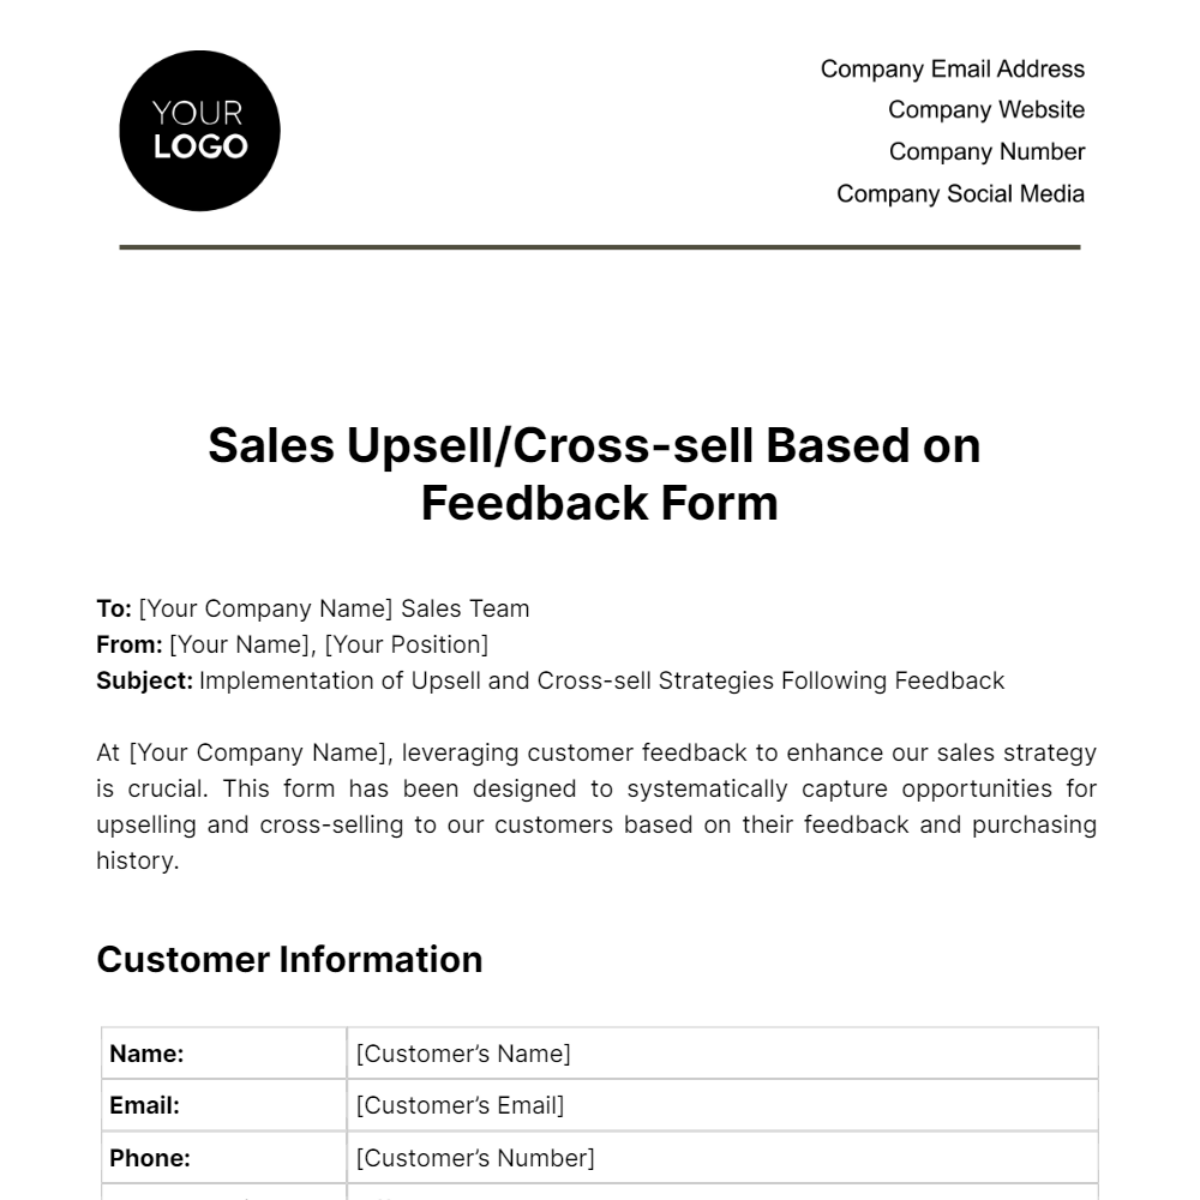 Free Sales Upsell/Cross-sell Based on Feedback Form Template